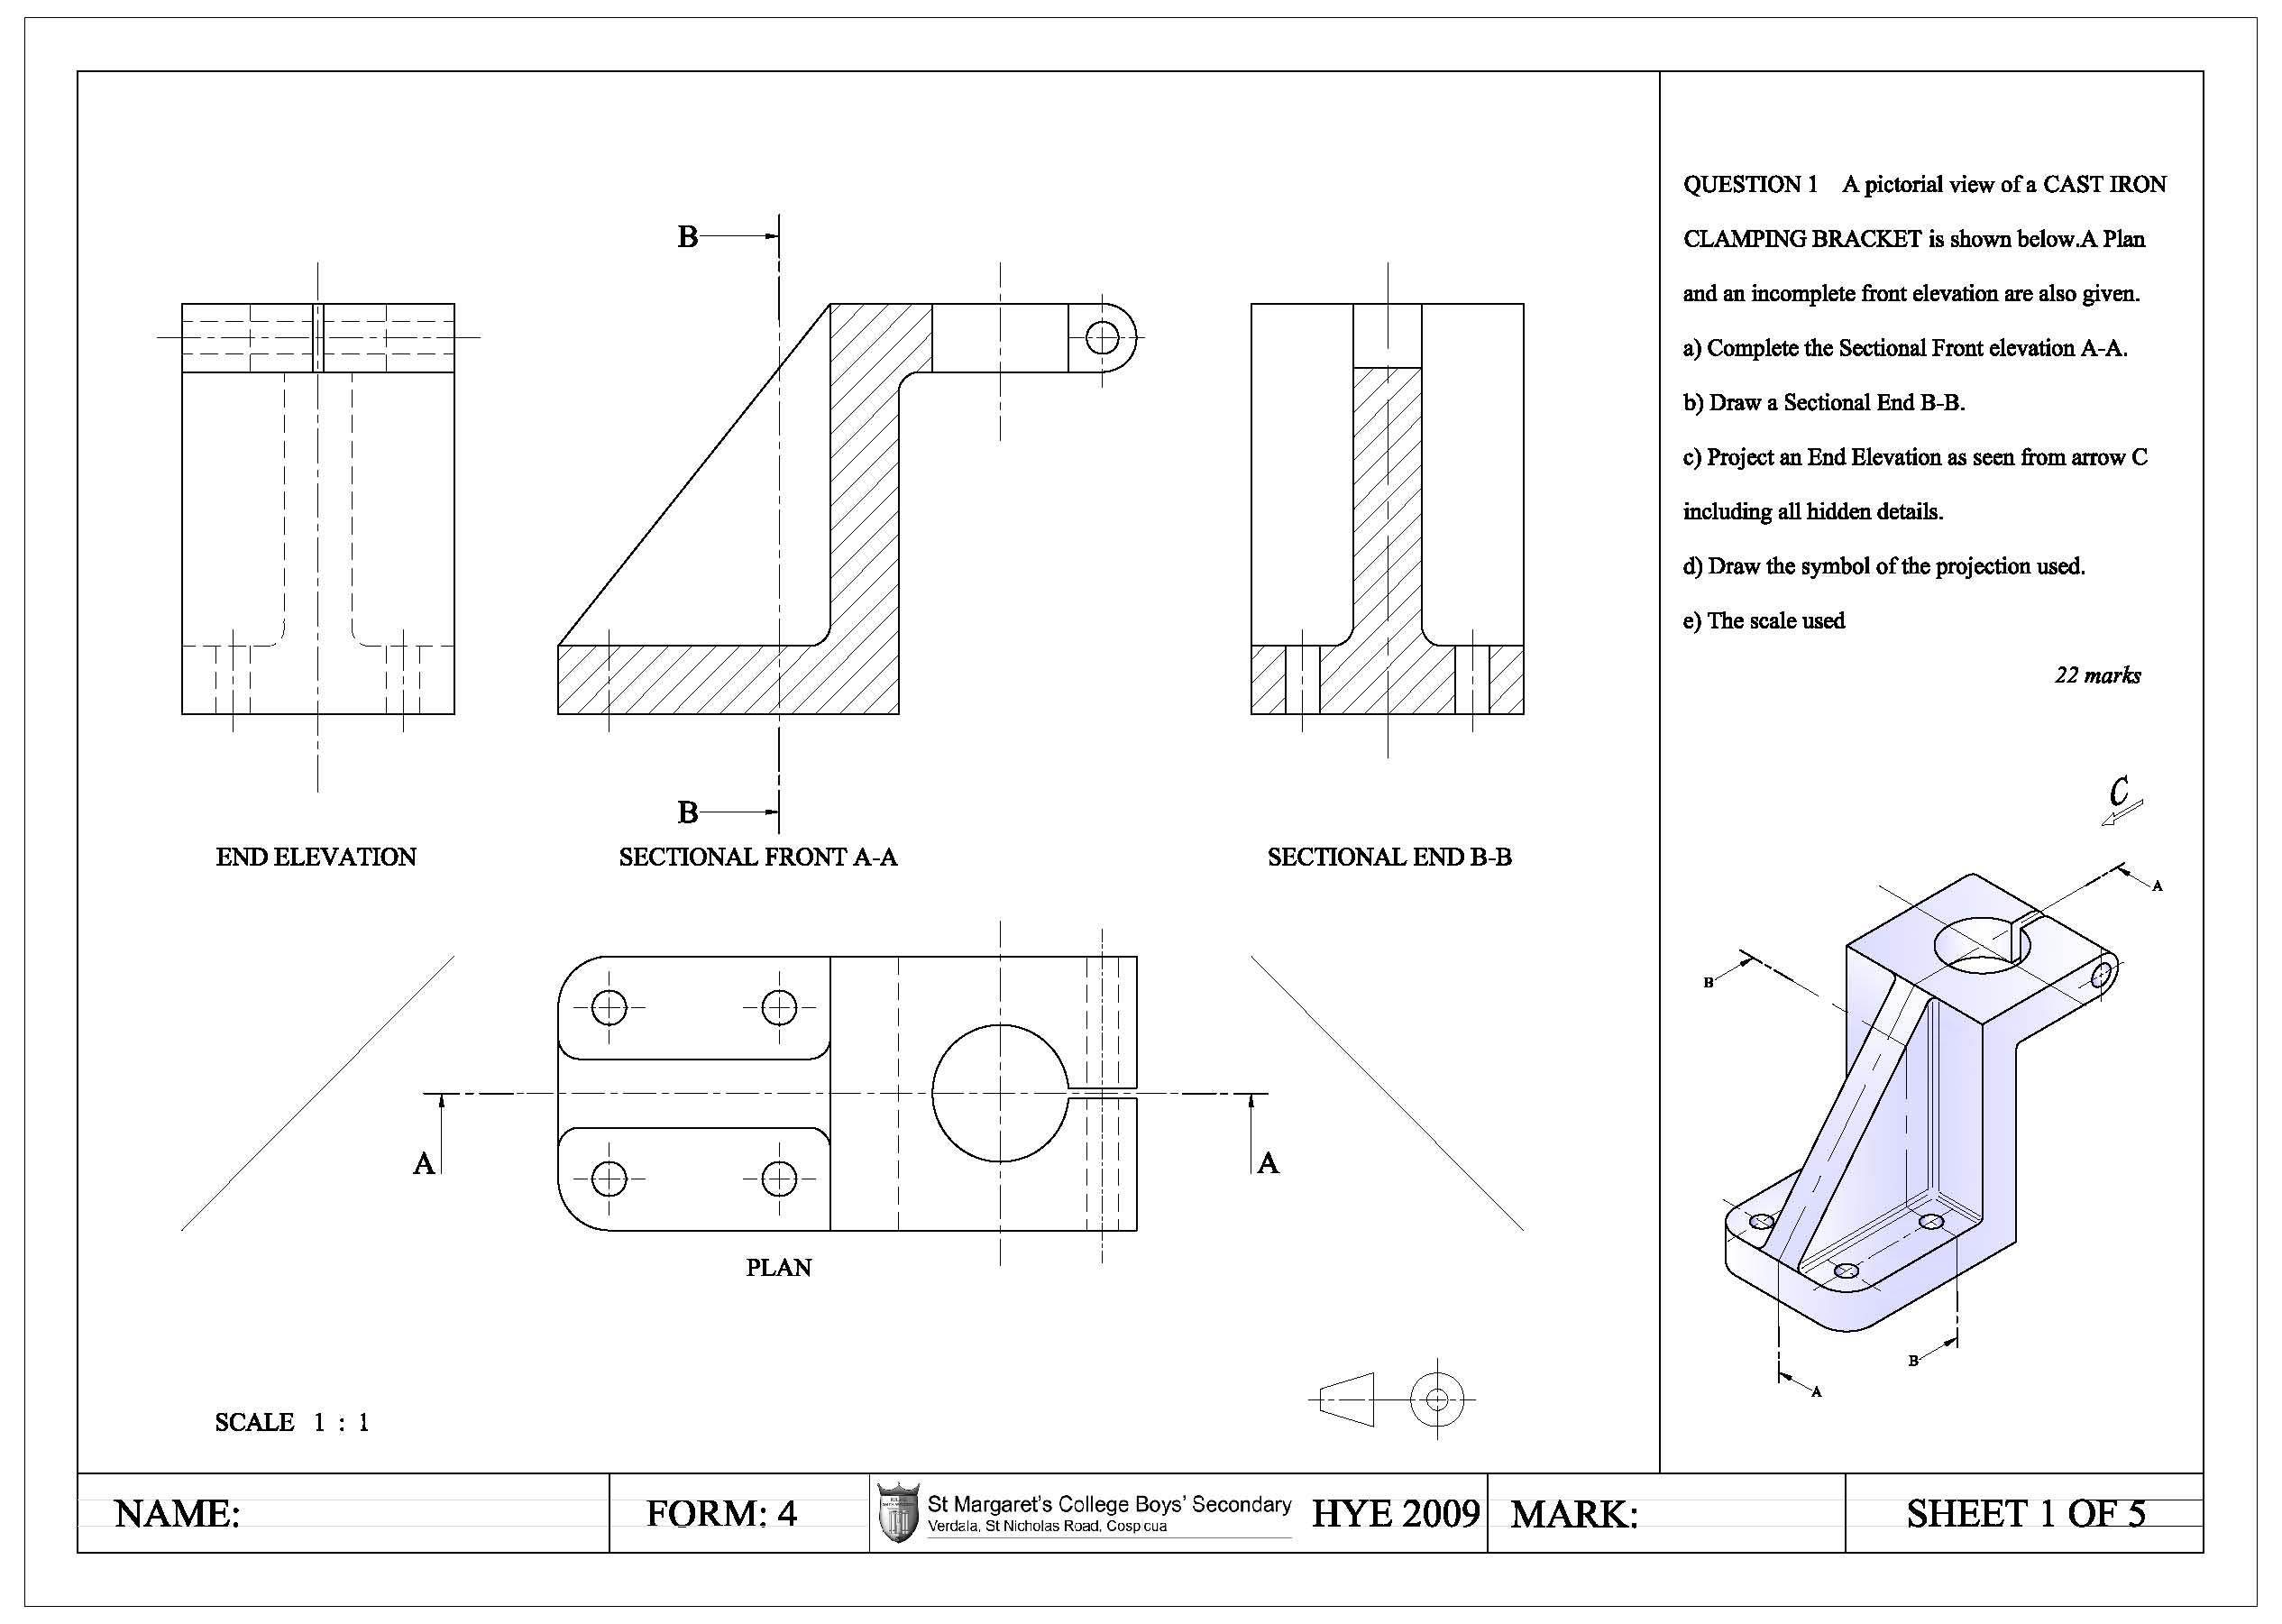 Mechanical Engineering Drawing Symbols Pdf Free Download at